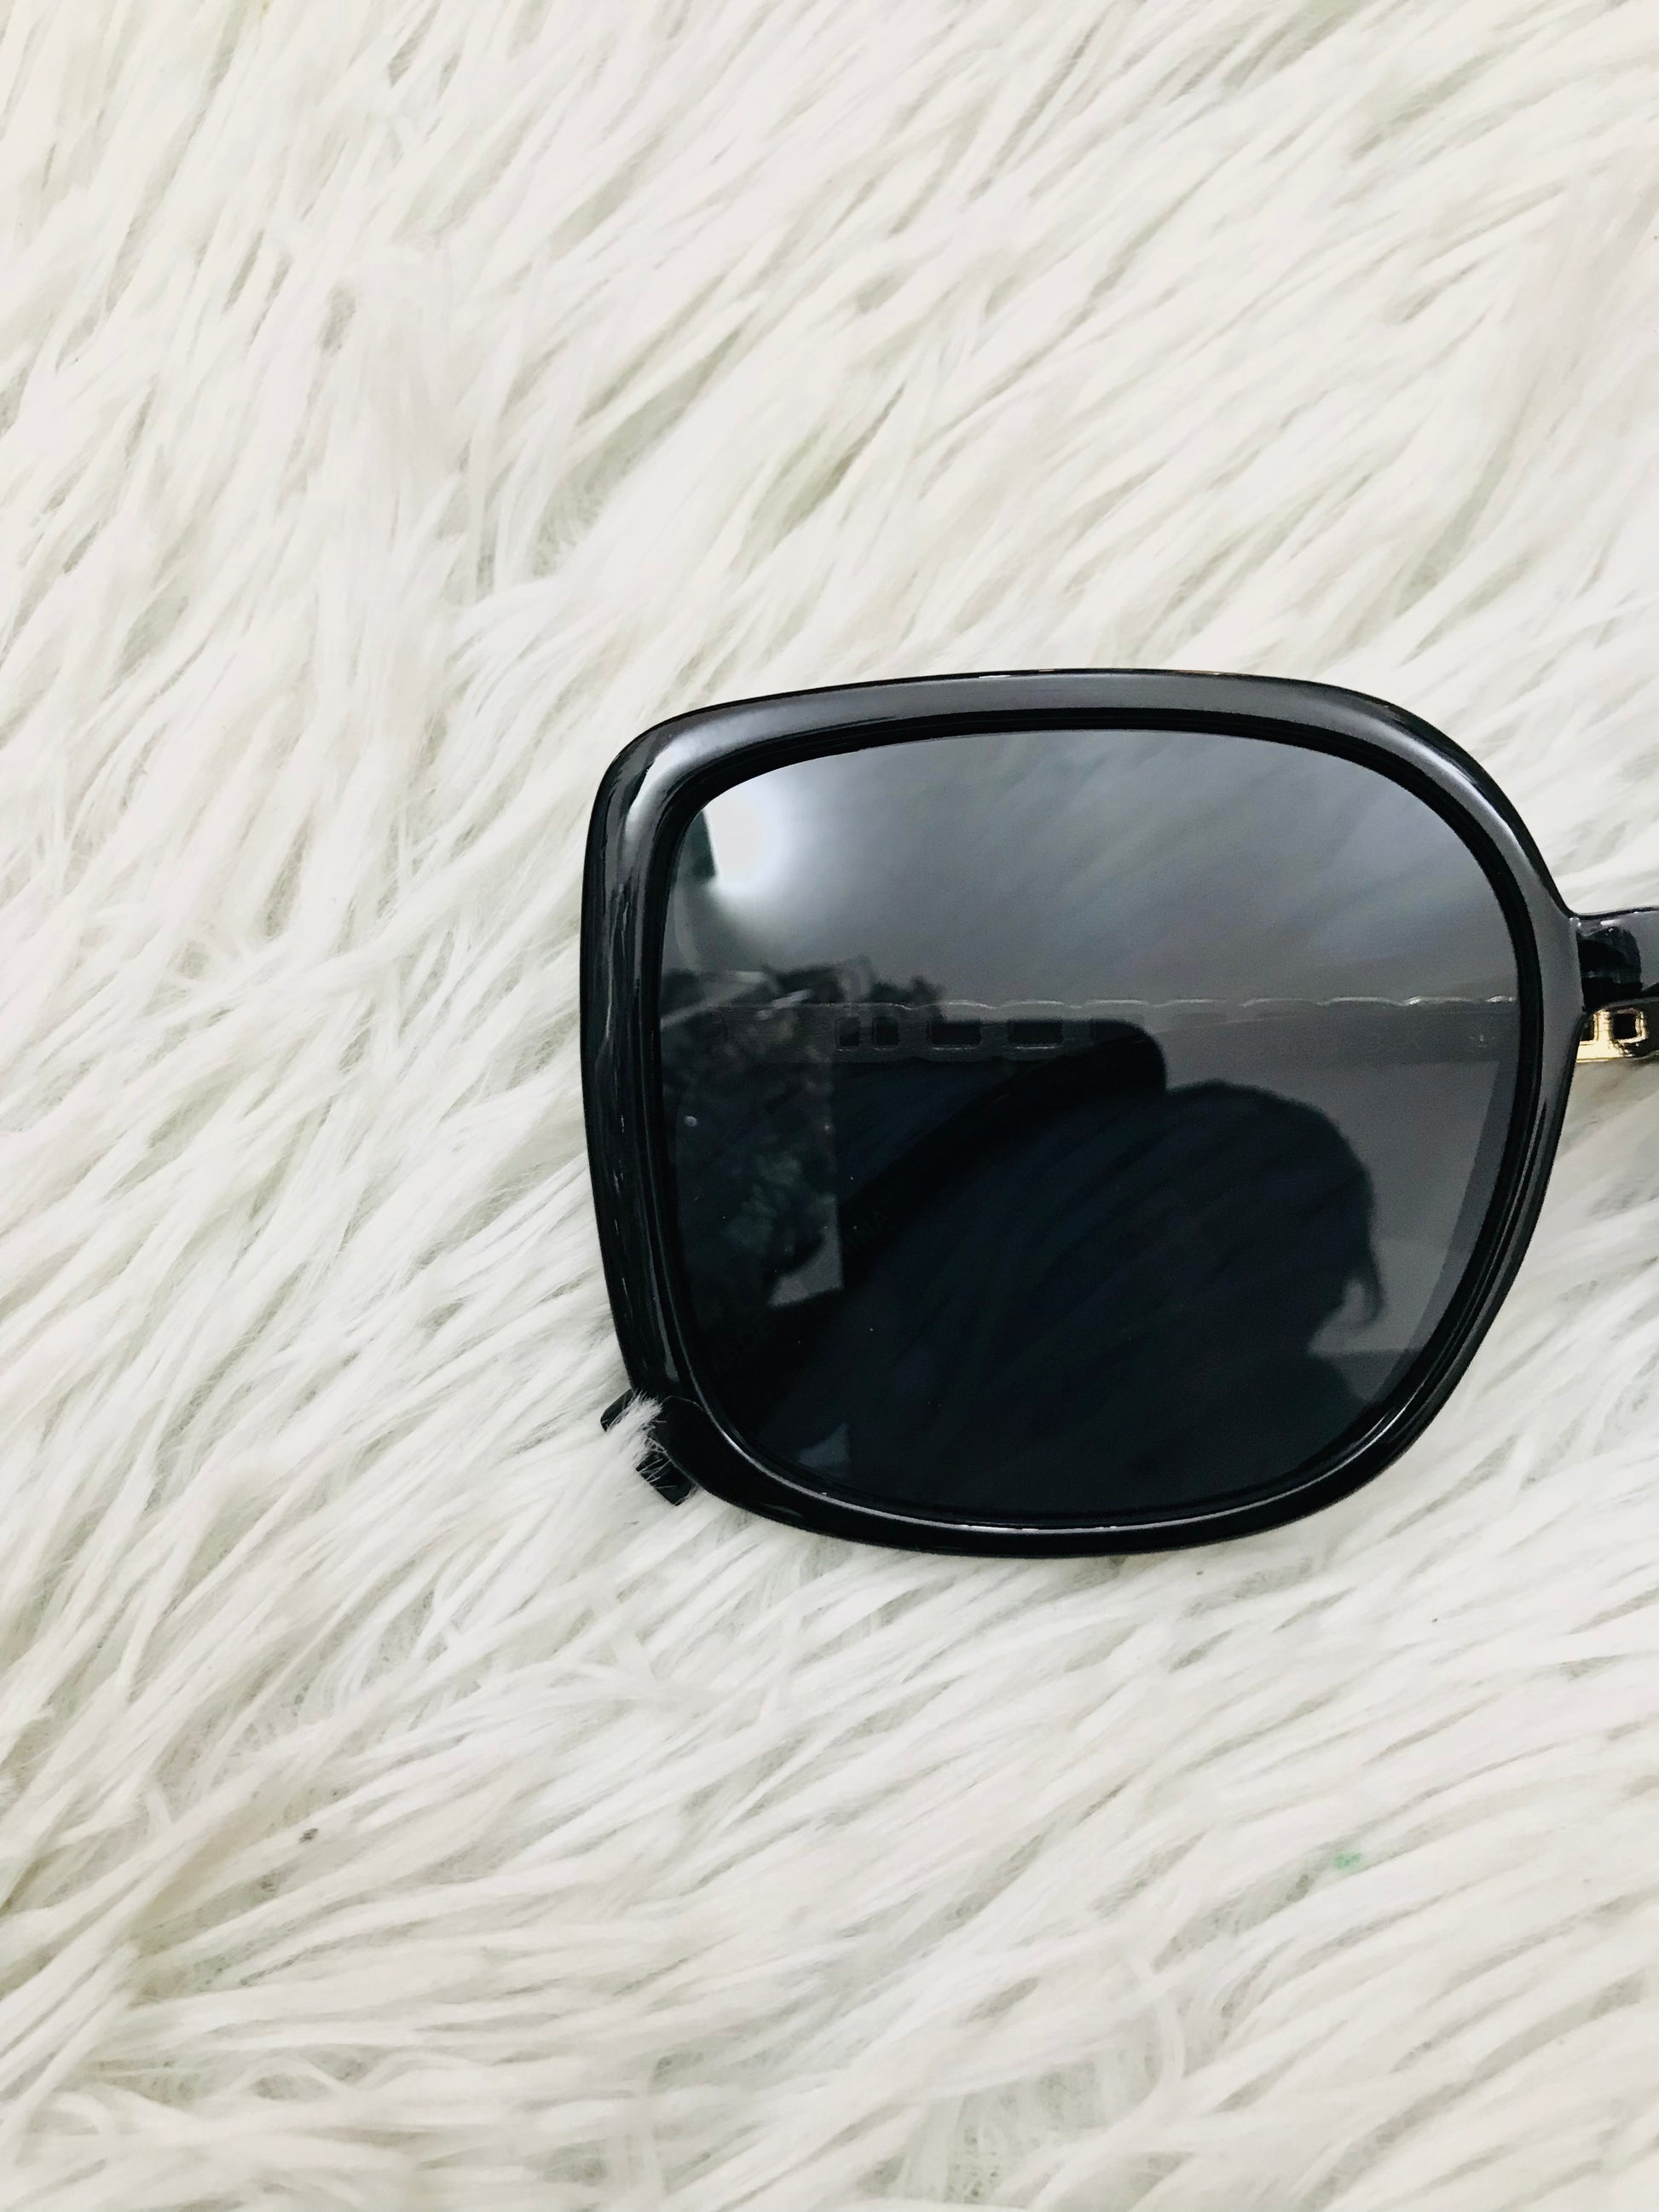 Lentes Fashion Nova original negro cuadrado con V en dorado en frente, –  Qlindo Store